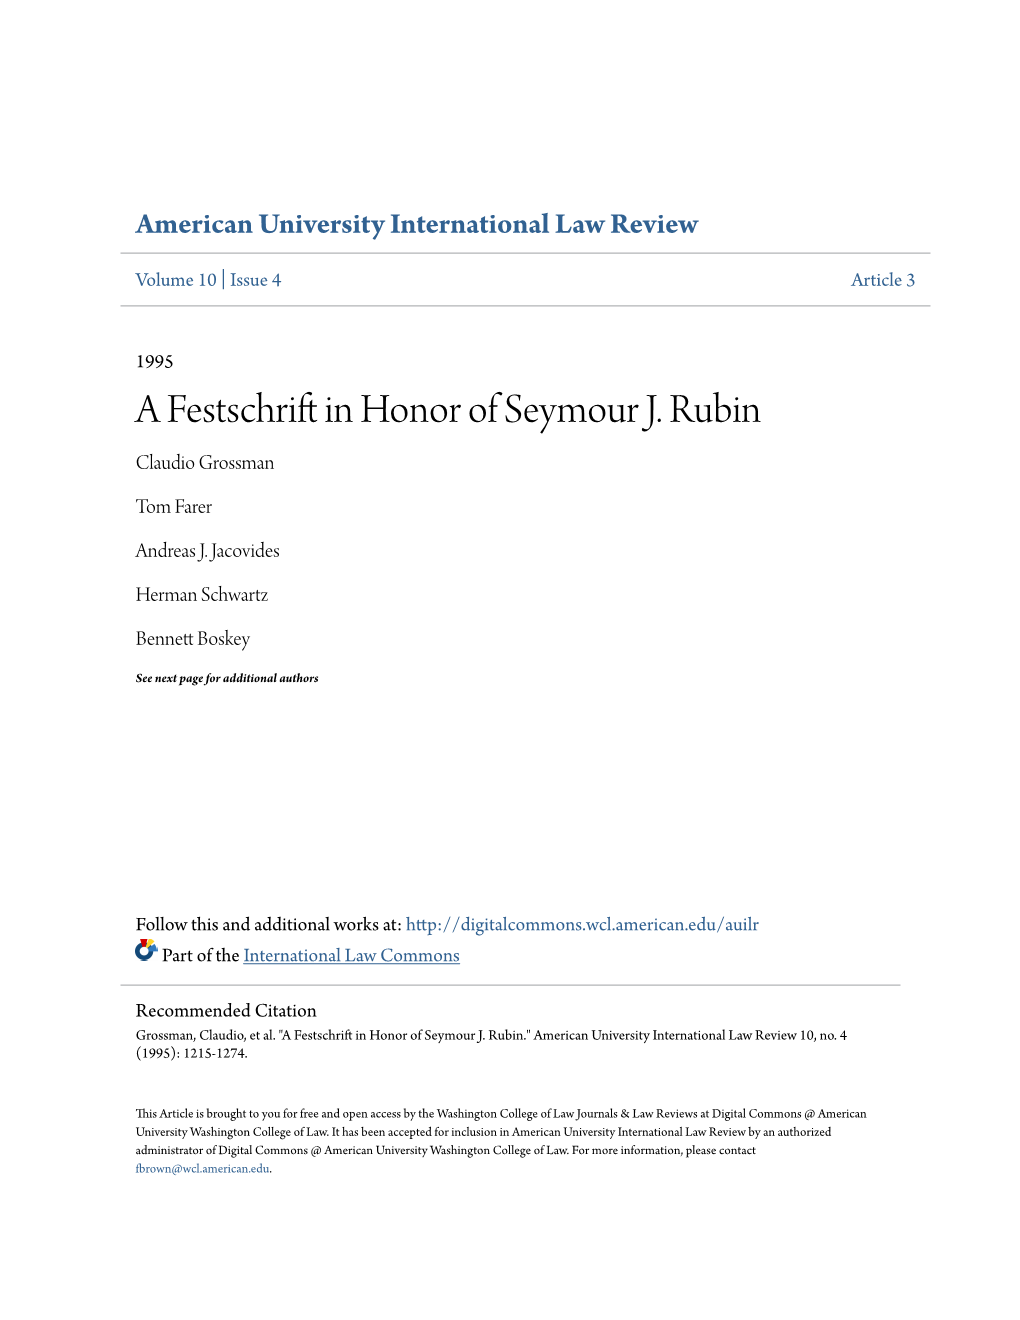 A Festschrift in Honor of Seymour J. Rubin